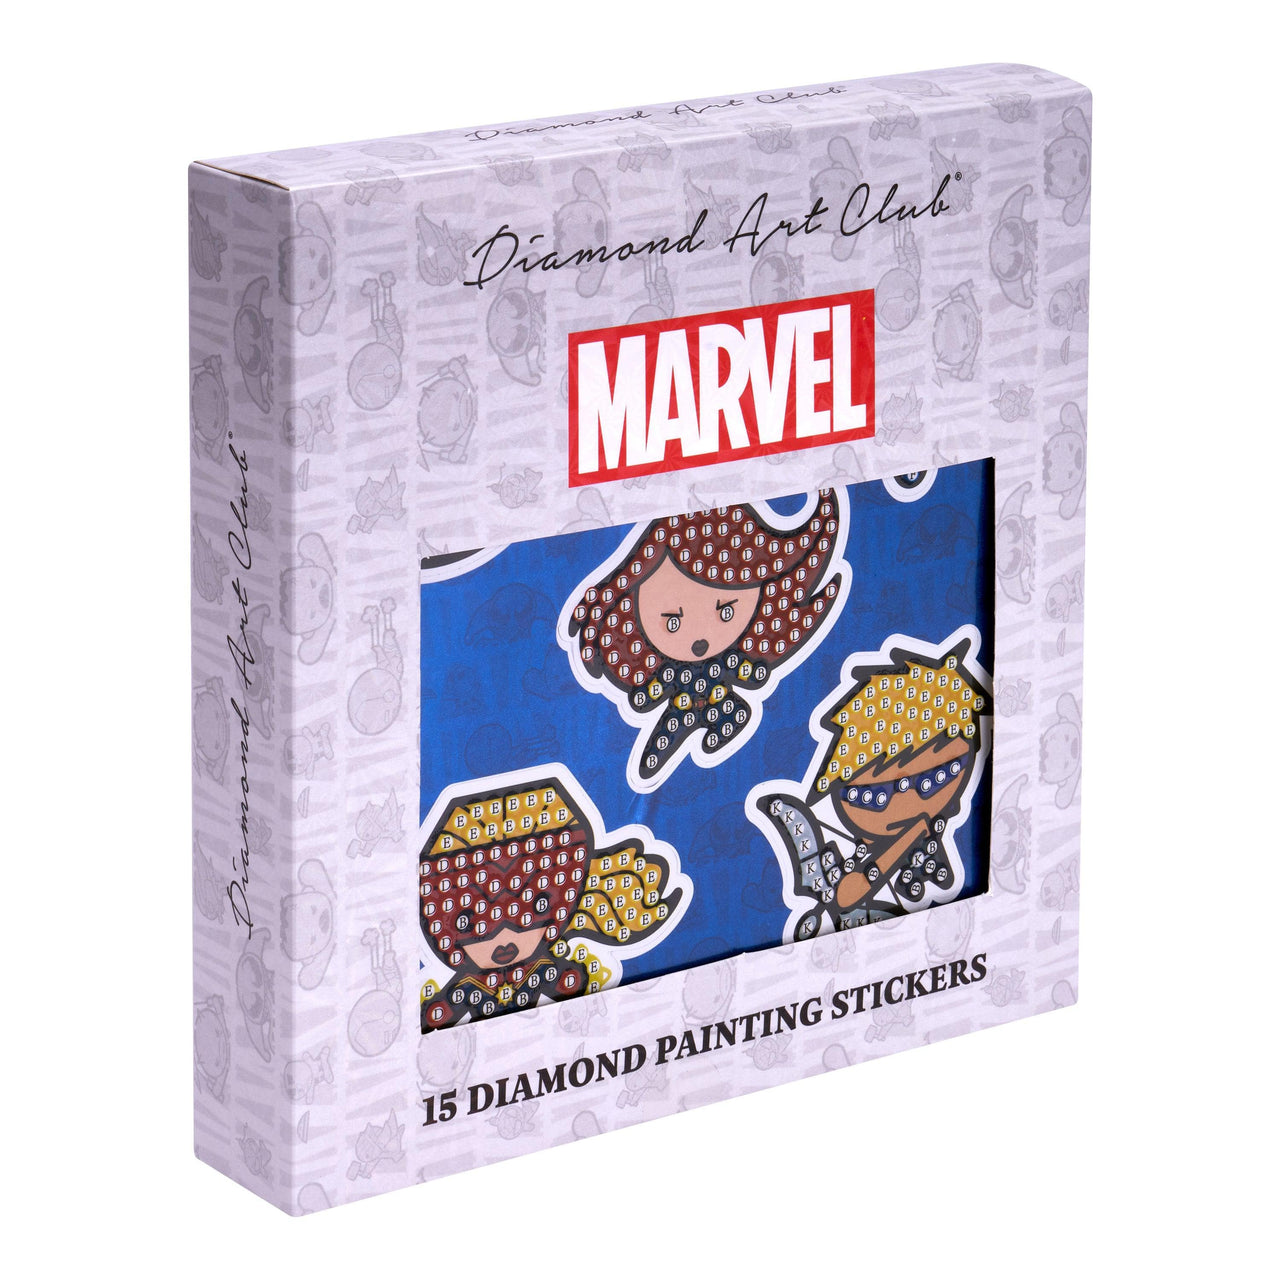 16pcs Marvel Superhero 5d Diamond Painting Stickers Kits Arts & Crafts For  Kids Diy Diamond Mosaic Sticker For Phone Laptop Water Bottle